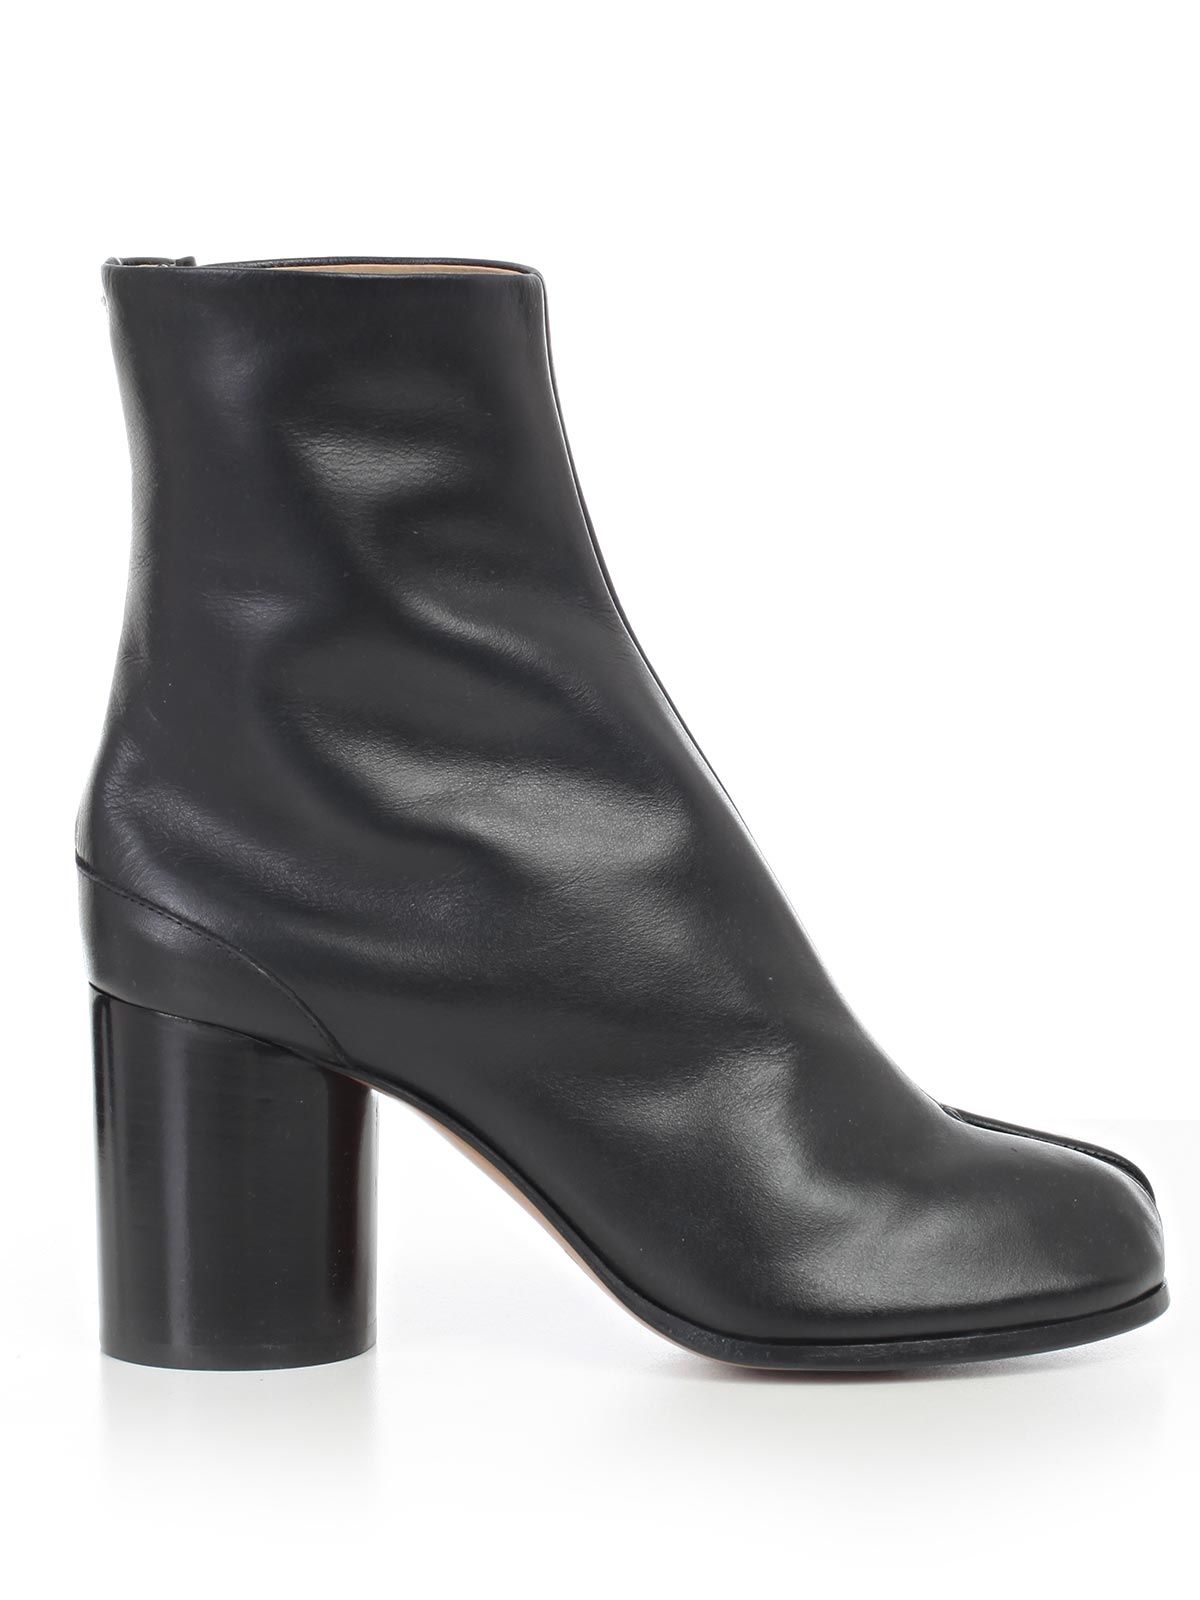 Maison Margiela - Maison Margiela Boots - Black, Women's Boots | Italist